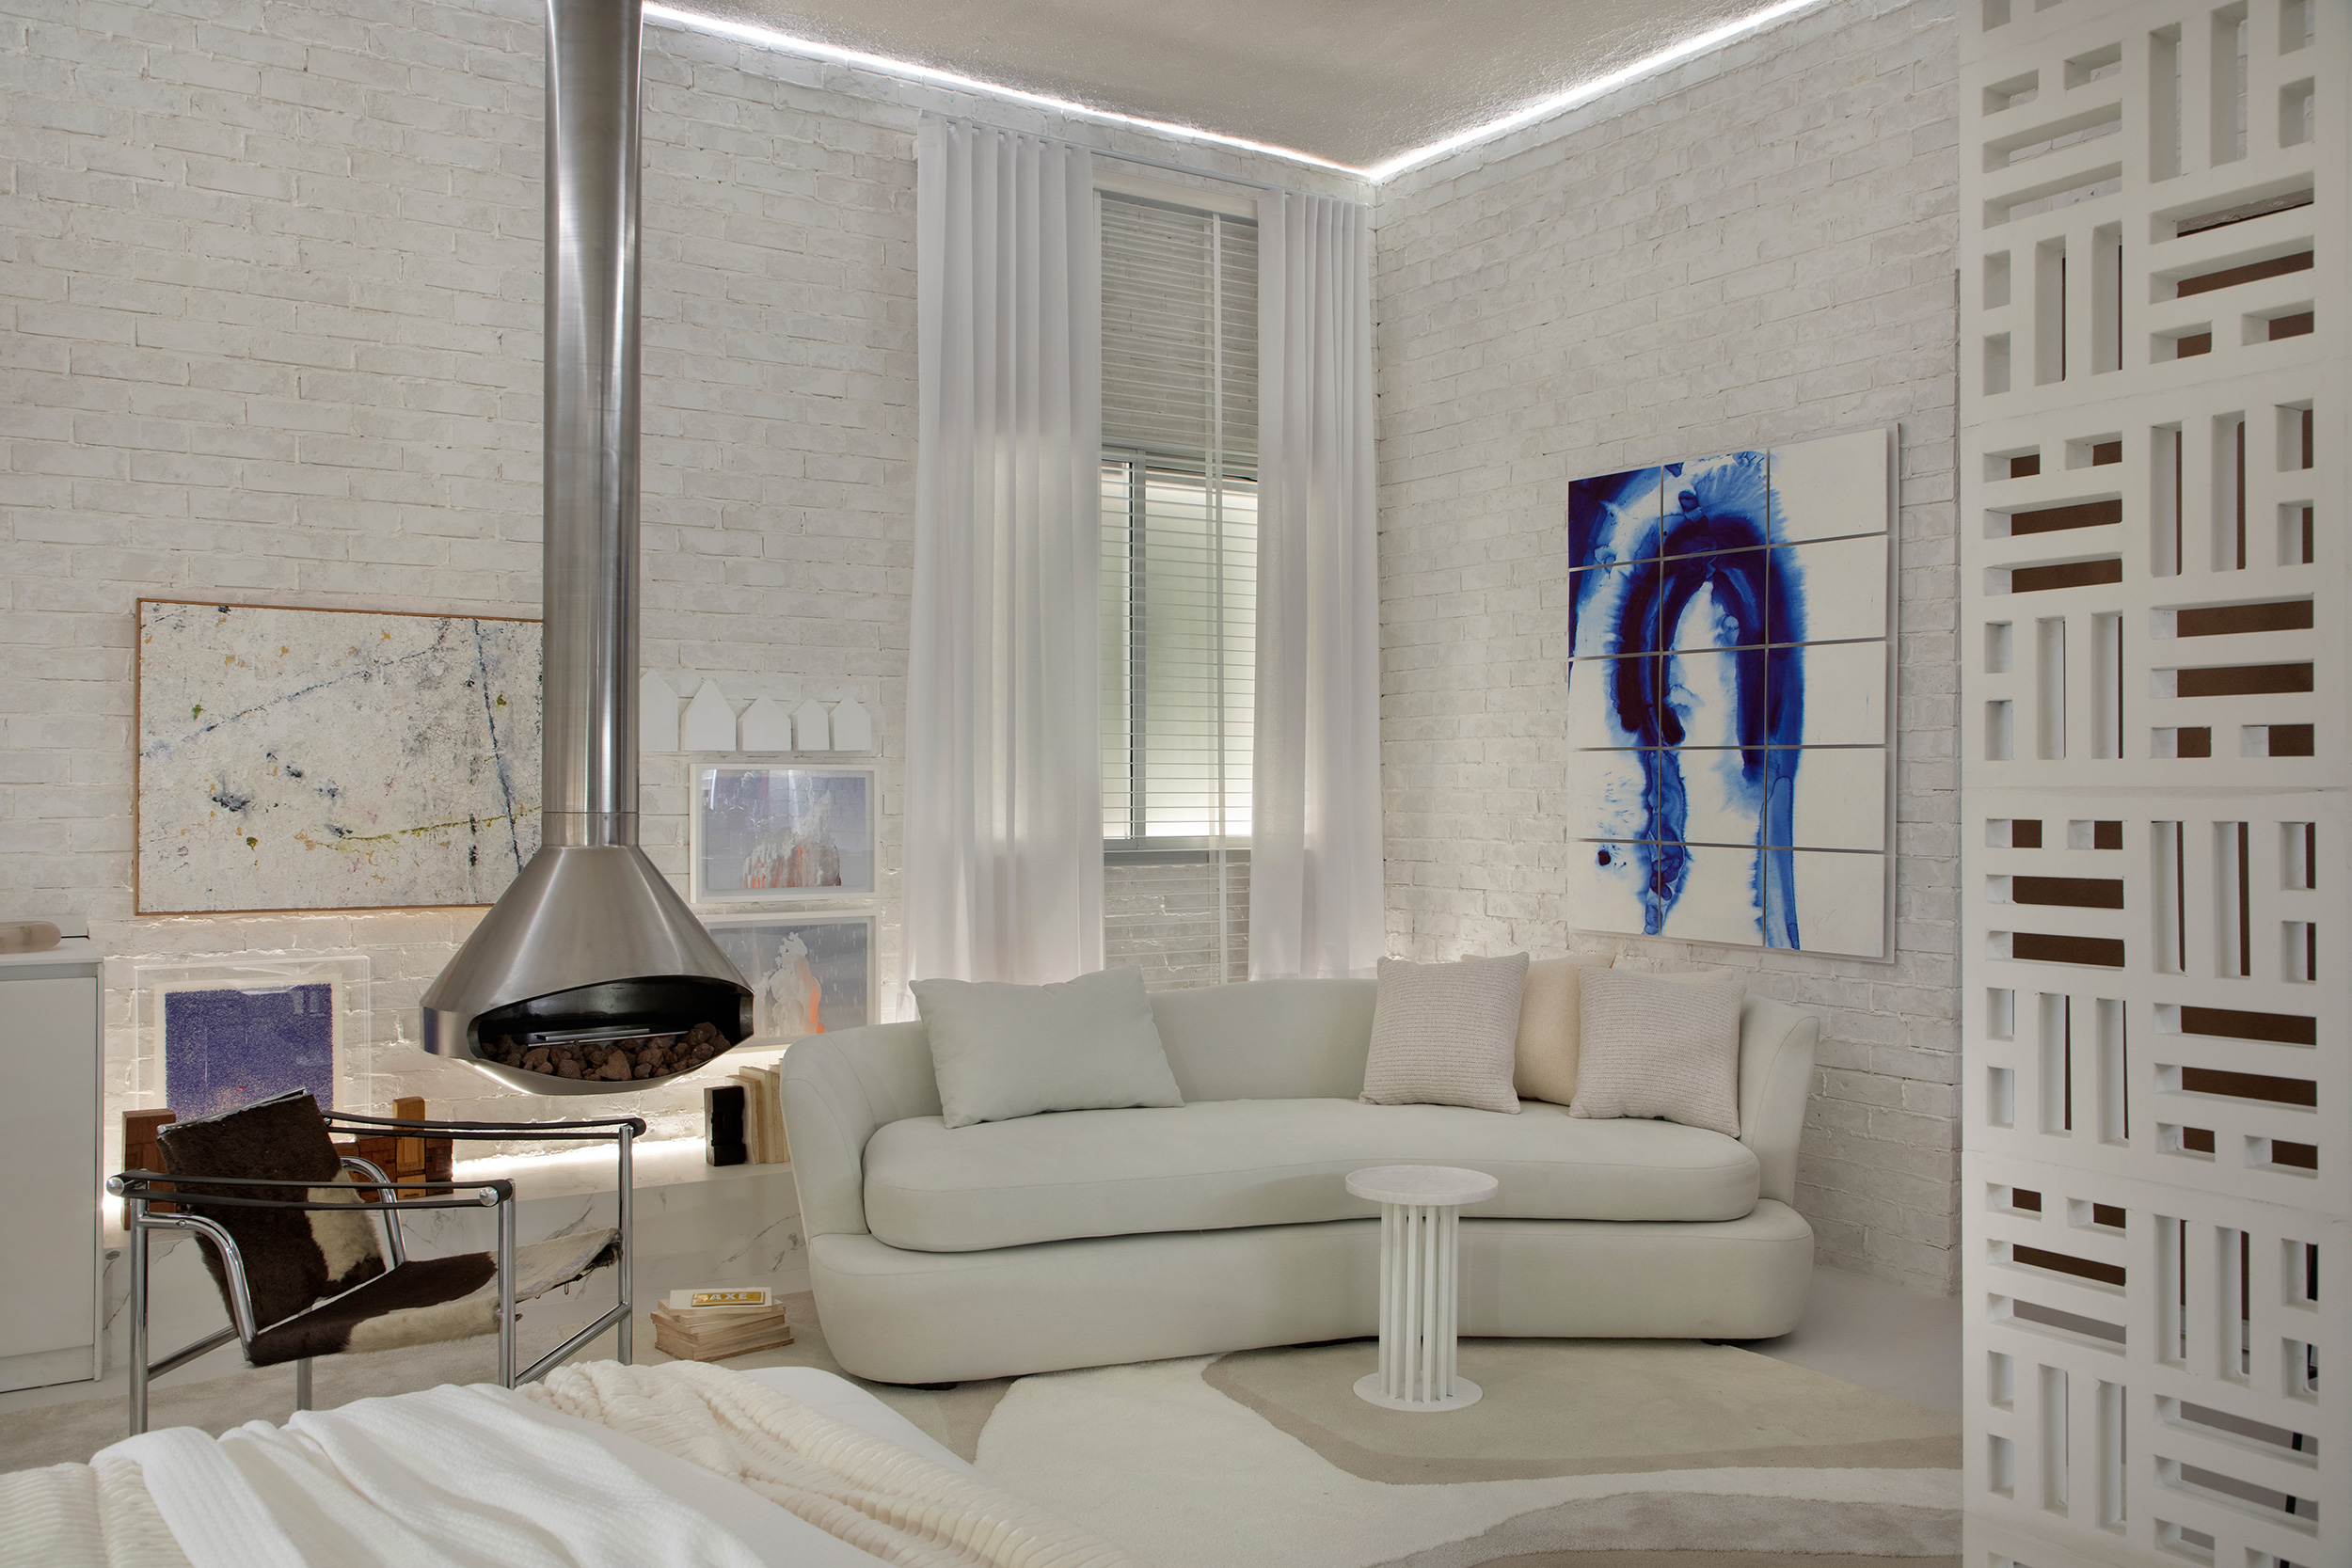 gregory copello estudio ostuni casacor sao paulo 2022 decoracao design mostras sala sofa lareira cobogo tapete branco